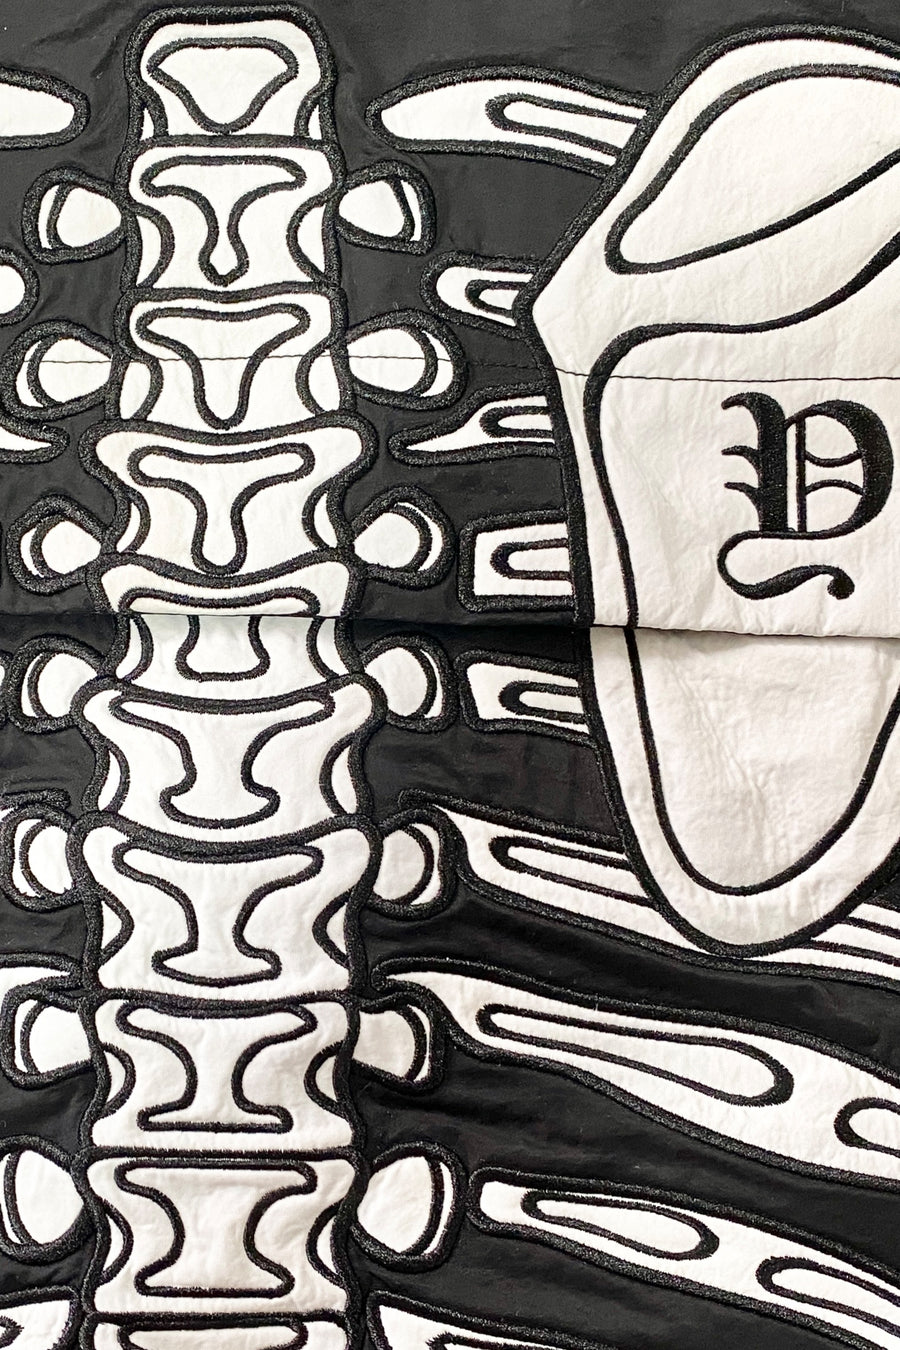 MAYO アノラック ブラック BONE embroidery anorak